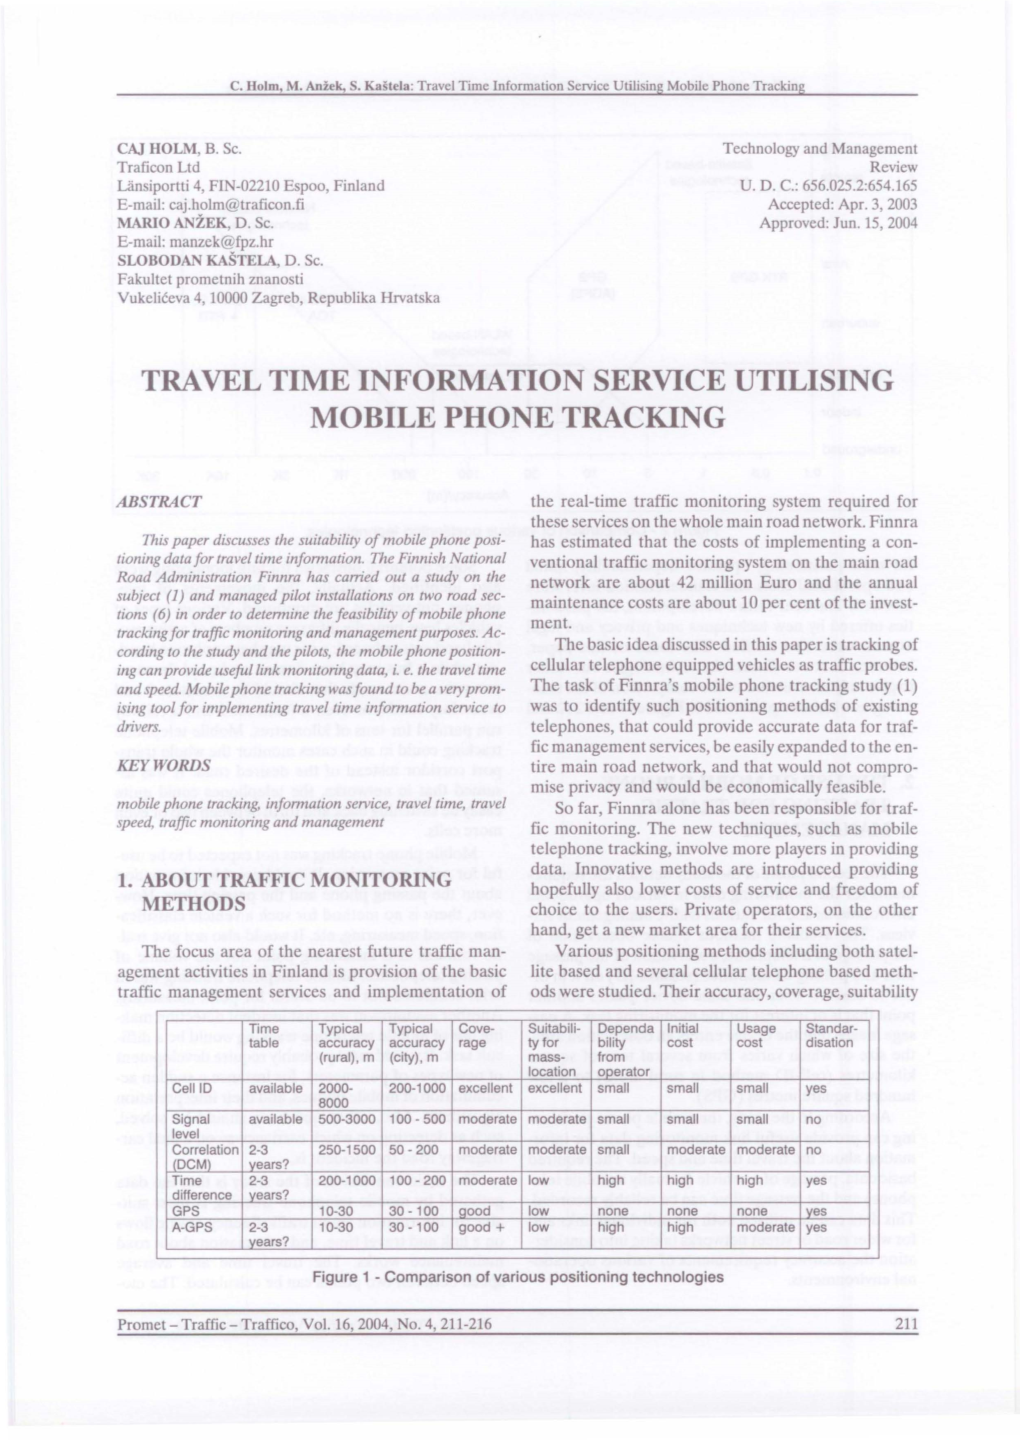 Travel Time Information Service Utilising Mobile Phone Tracking